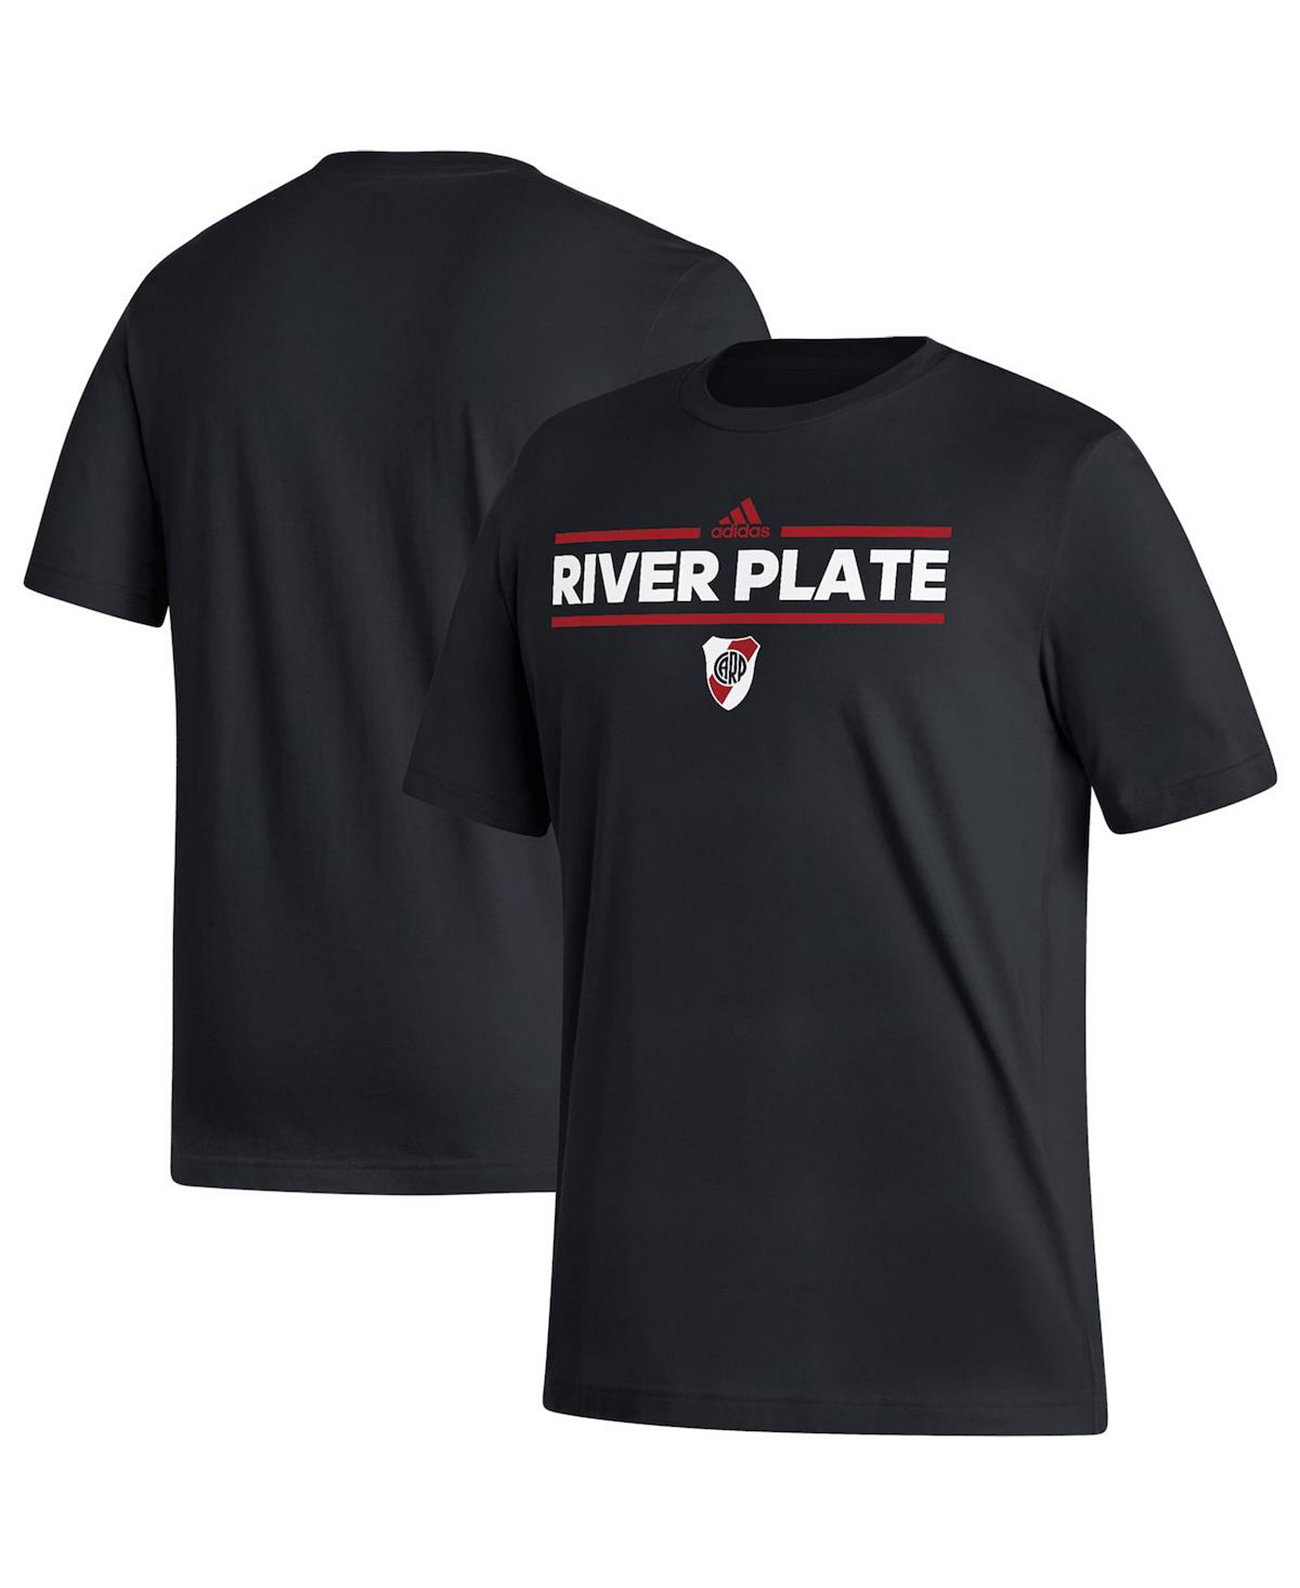 Men's Black Club Atletico River Plate Dassler T-Shirt Adidas